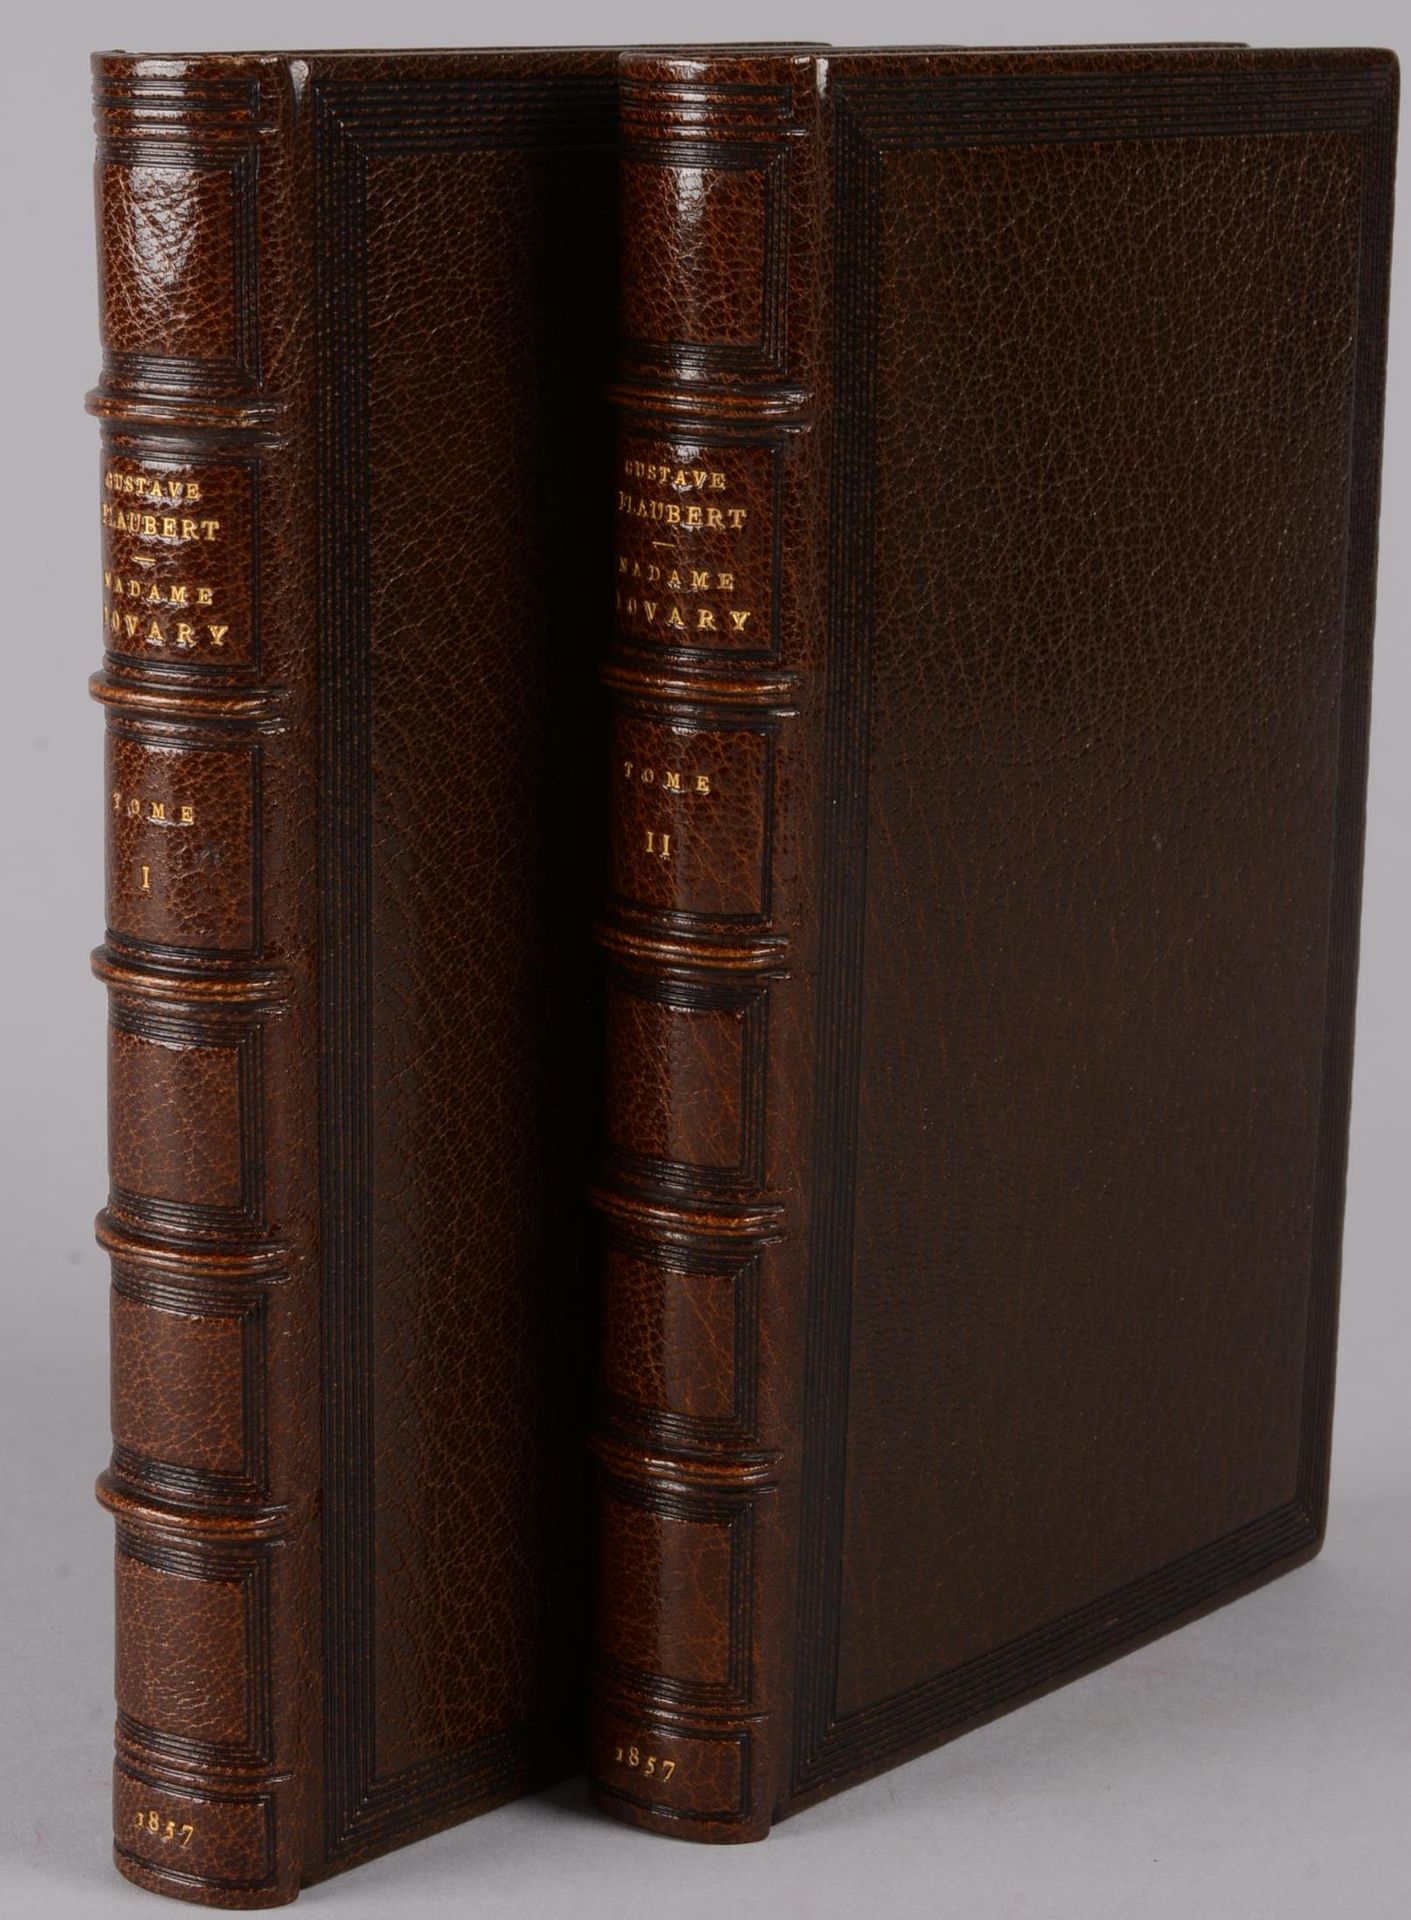 FLAUBERT Gustave 弗劳贝尔-古斯塔夫

包法利夫人》--《省亲》的故事



巴黎，Michel Levy frères，1857年，2卷本。
&hellip;